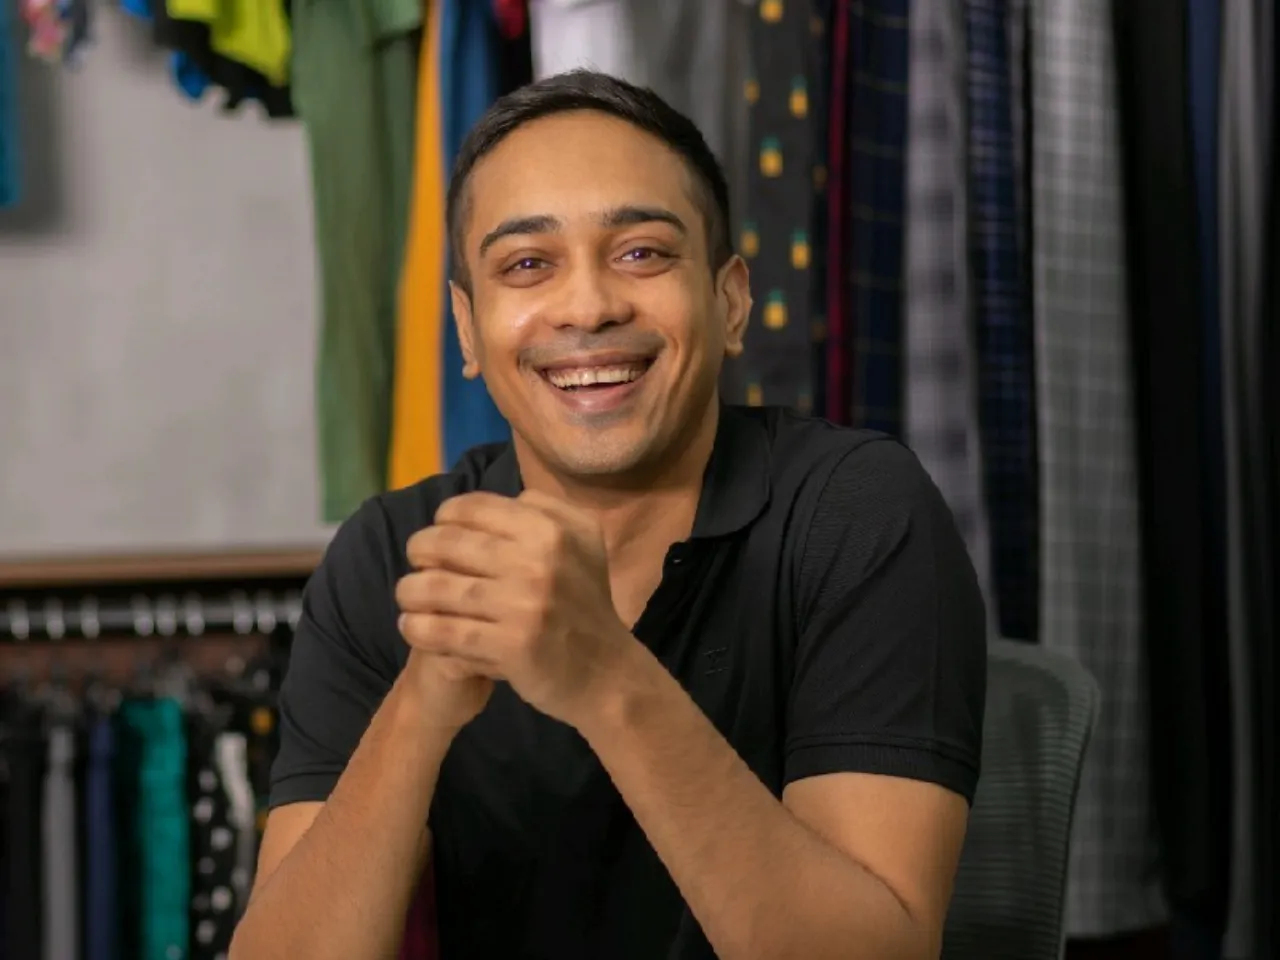 Men's premiun innerwear and lifestyle brand XYXX raises Rs 110 crore from Amazon's Smbhav Venture Fund